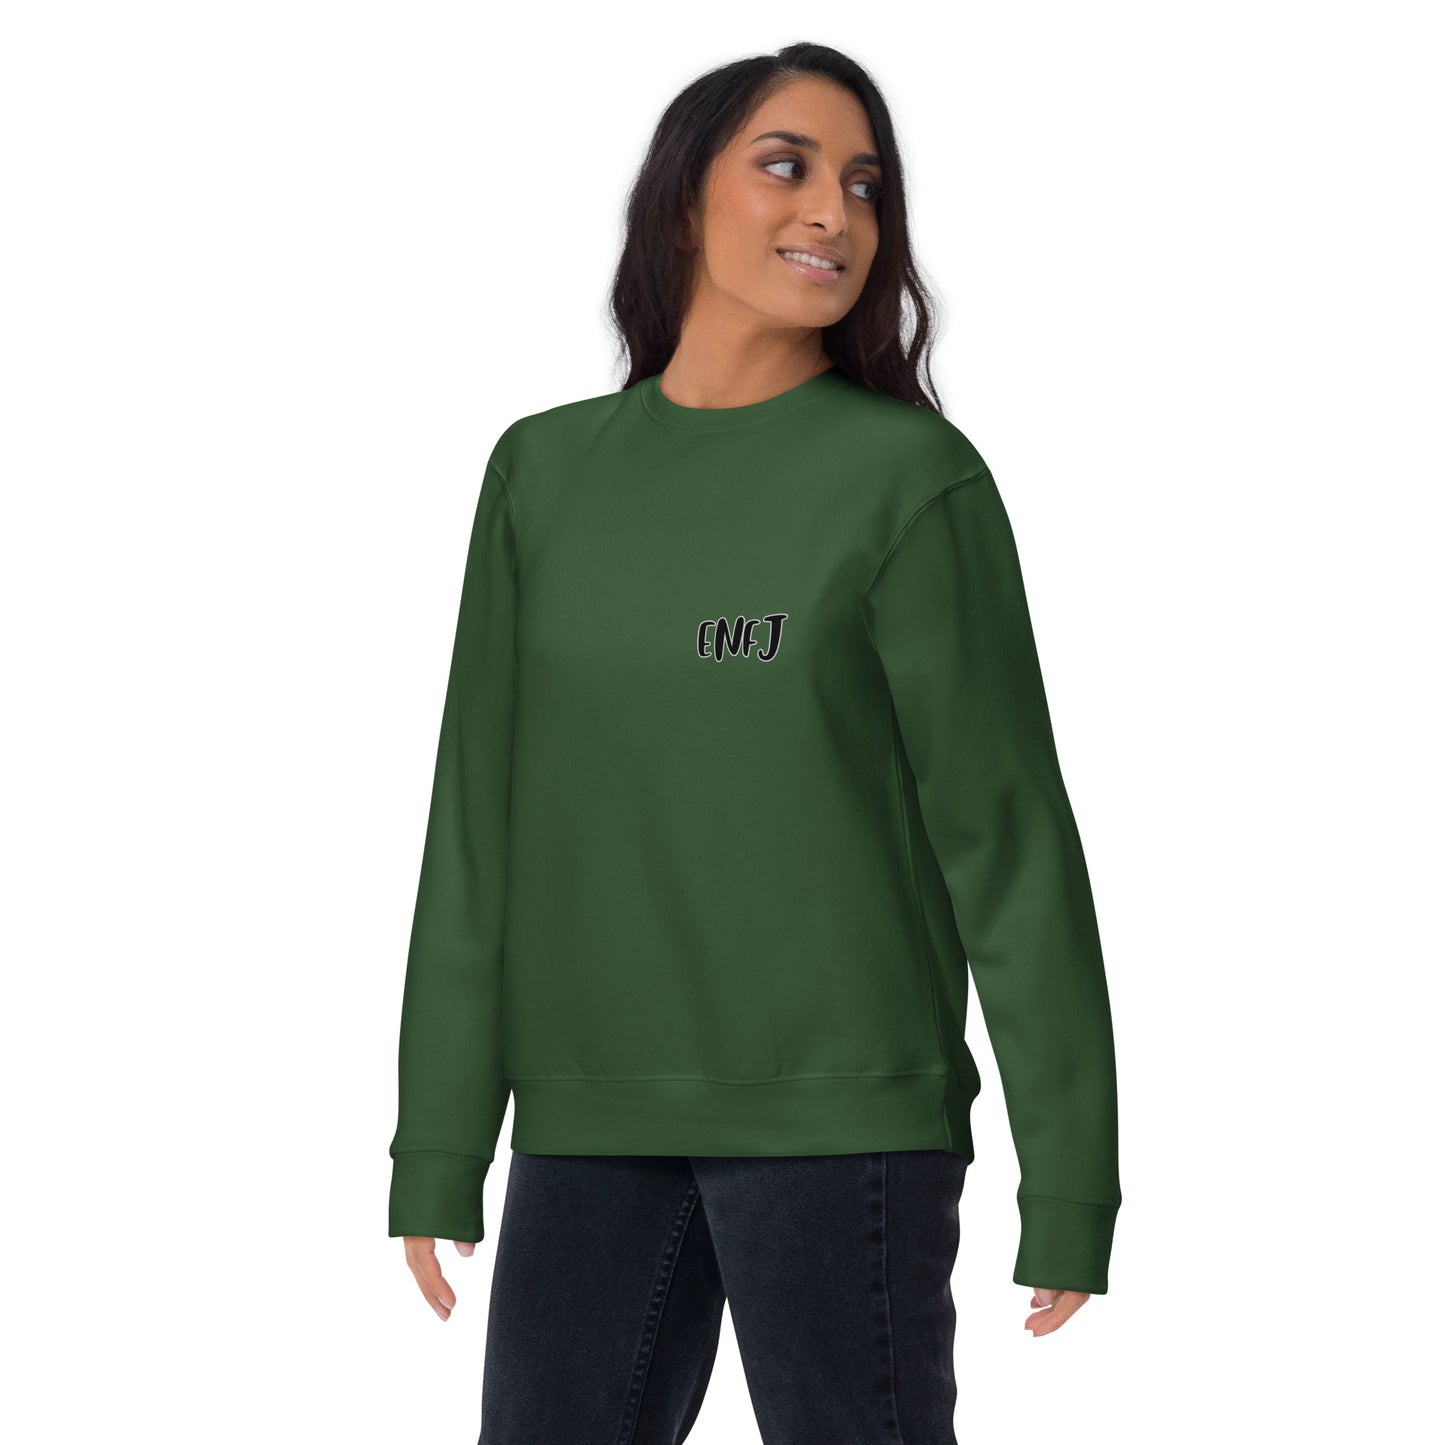 ENFJ Unisex Premium Sweatshirt